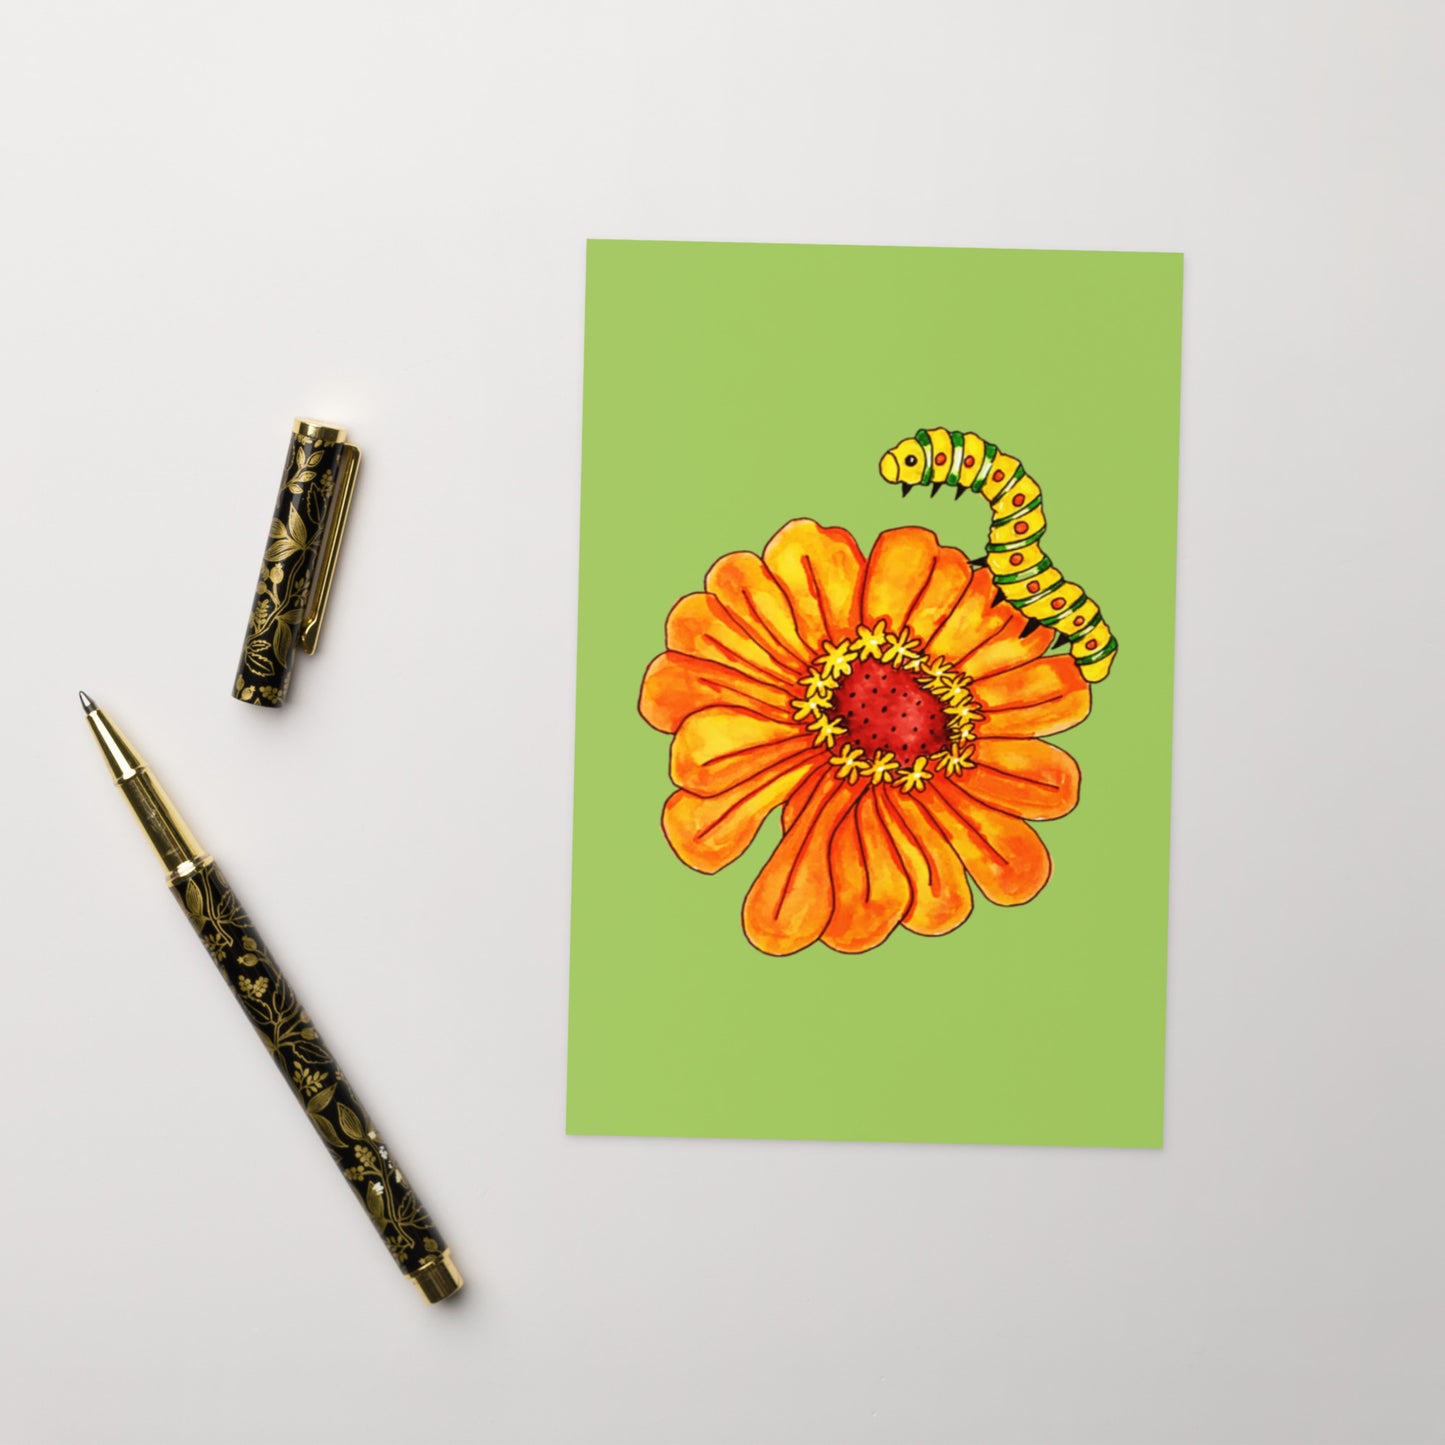 Orange Flower Caterpillar Greeting card - Art Love Decor